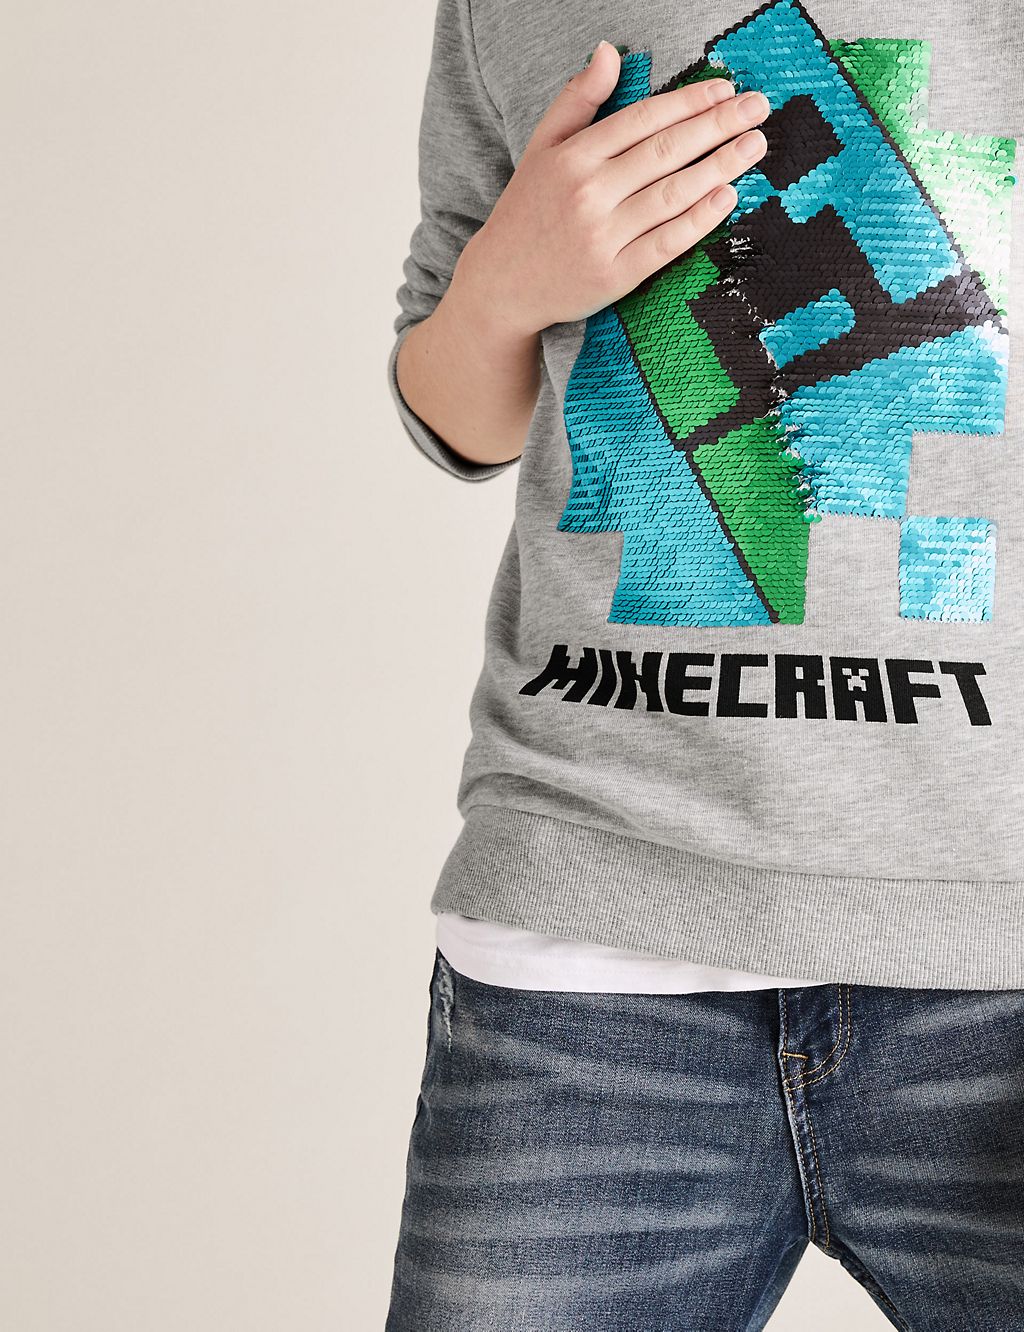 Minecraft™ Reversible Sequin Sweatshirt (6-16 Yrs) 2 of 4